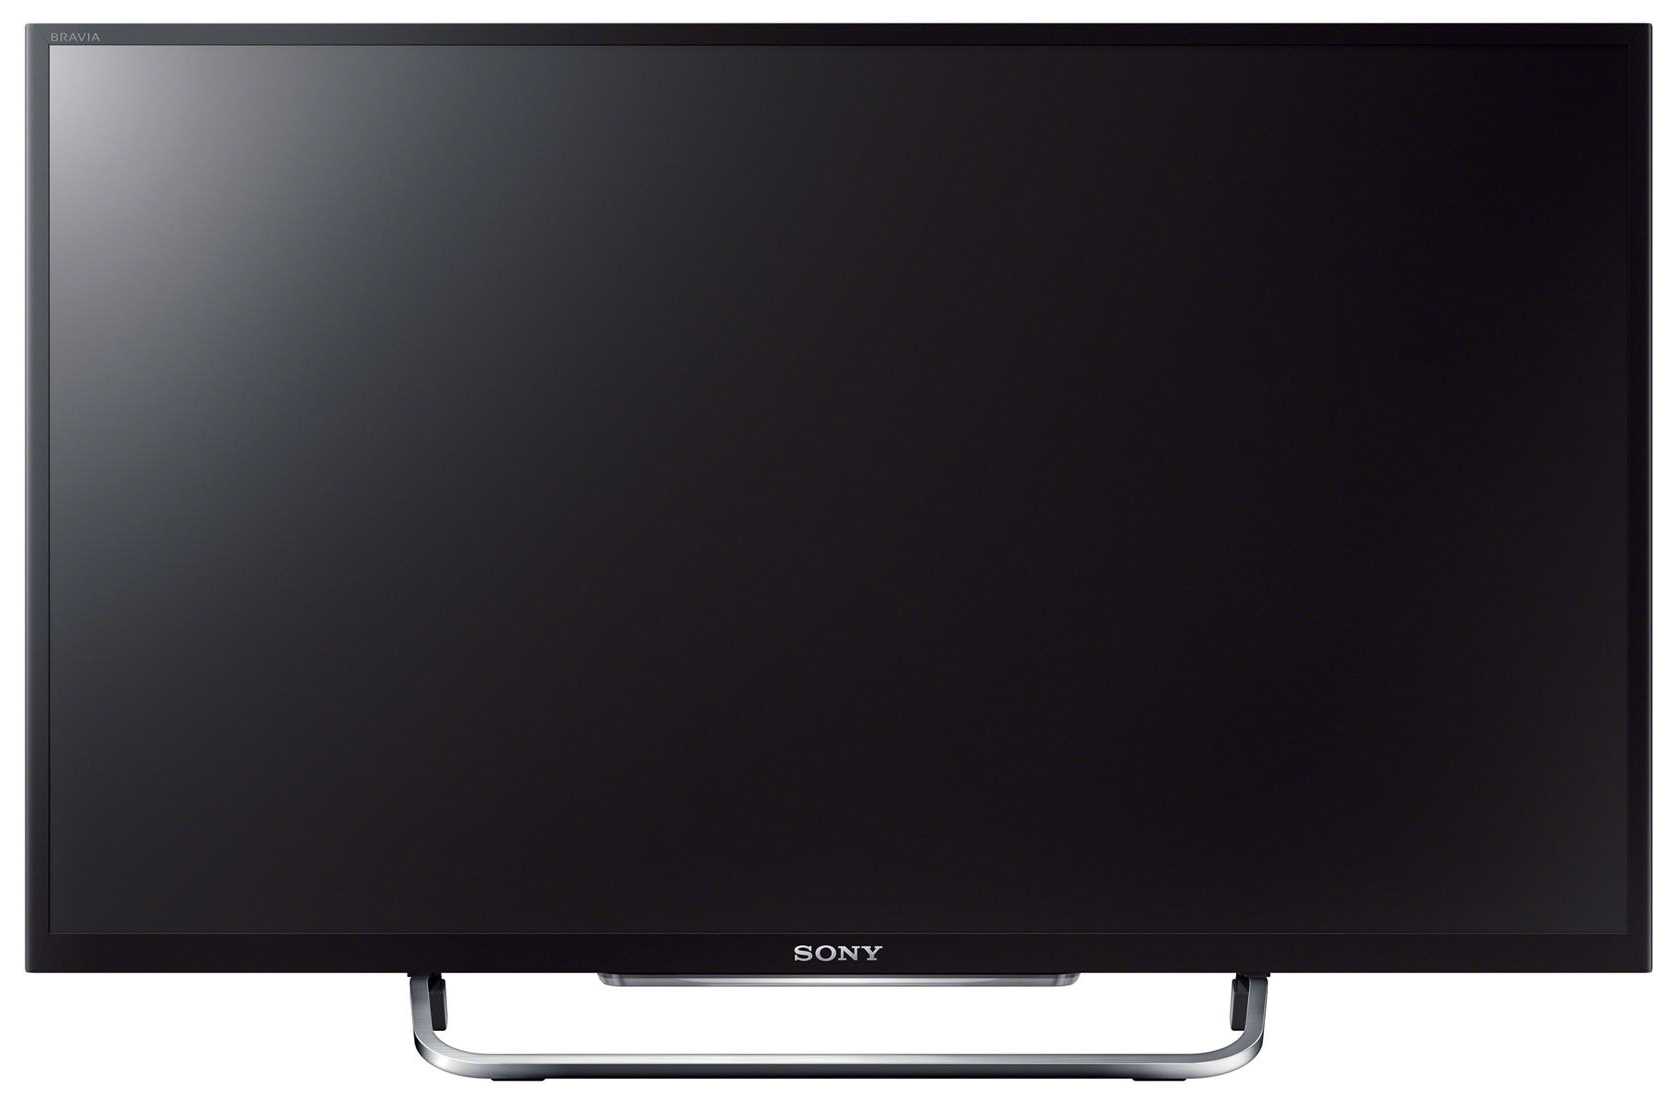 Sony kdl-32r435b - купить , скидки, цена, отзывы, обзор, характеристики - телевизоры